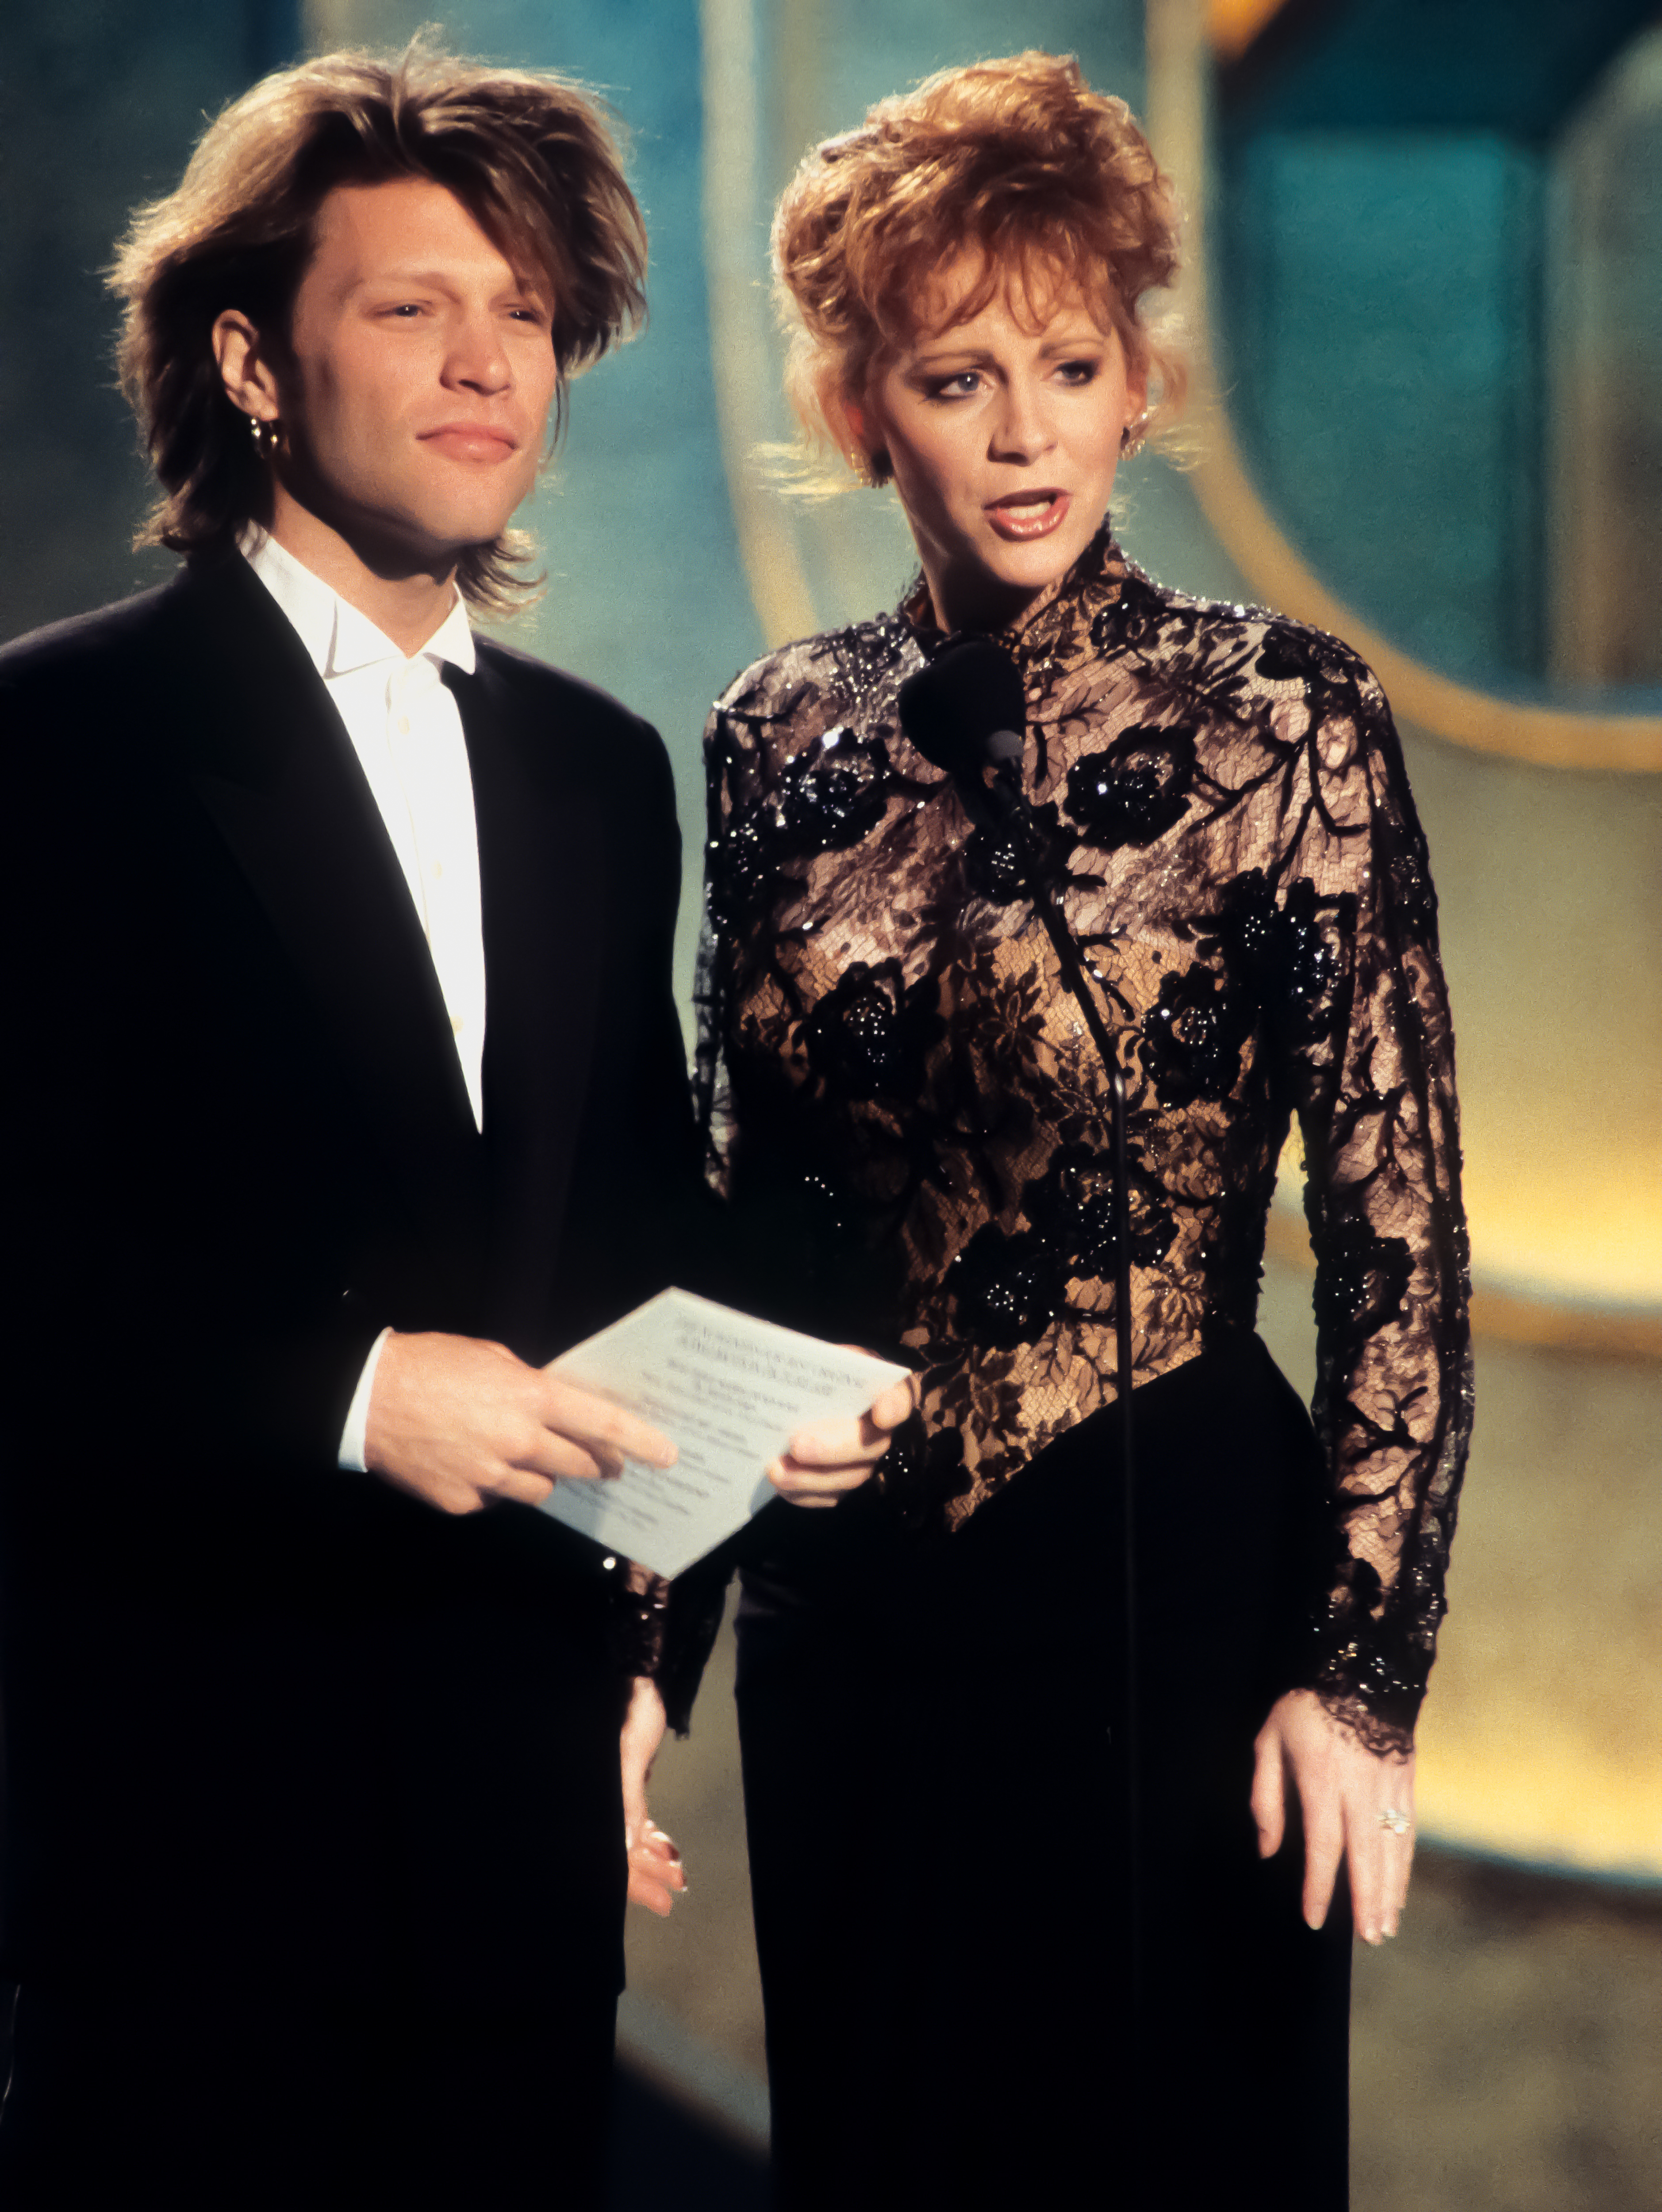 Jon Bon Jovi and Reba McEntire